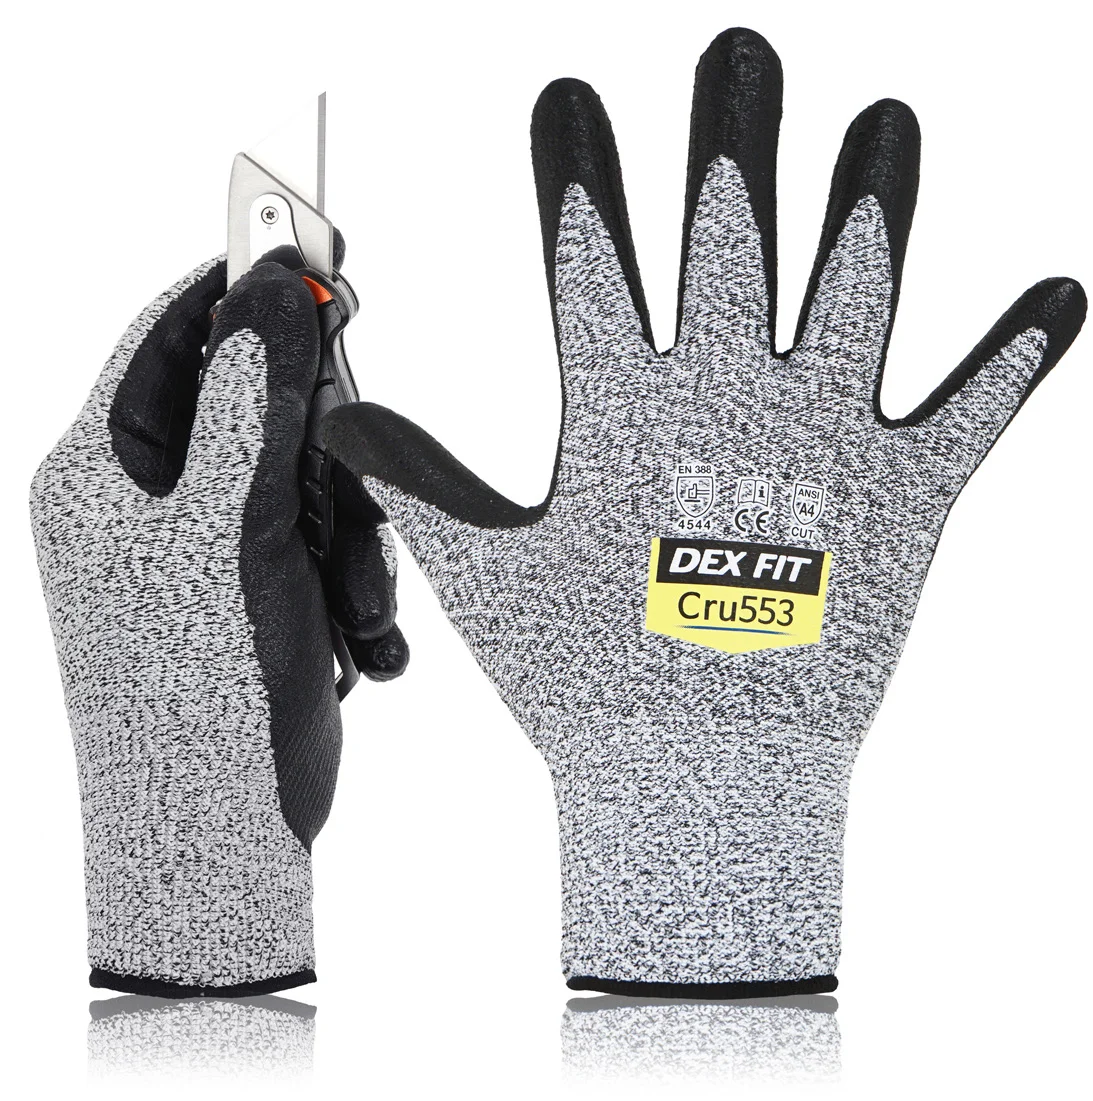 Dex契合5级耐切割手套cru553 - Buy 防割手套,手套,手套Product on 